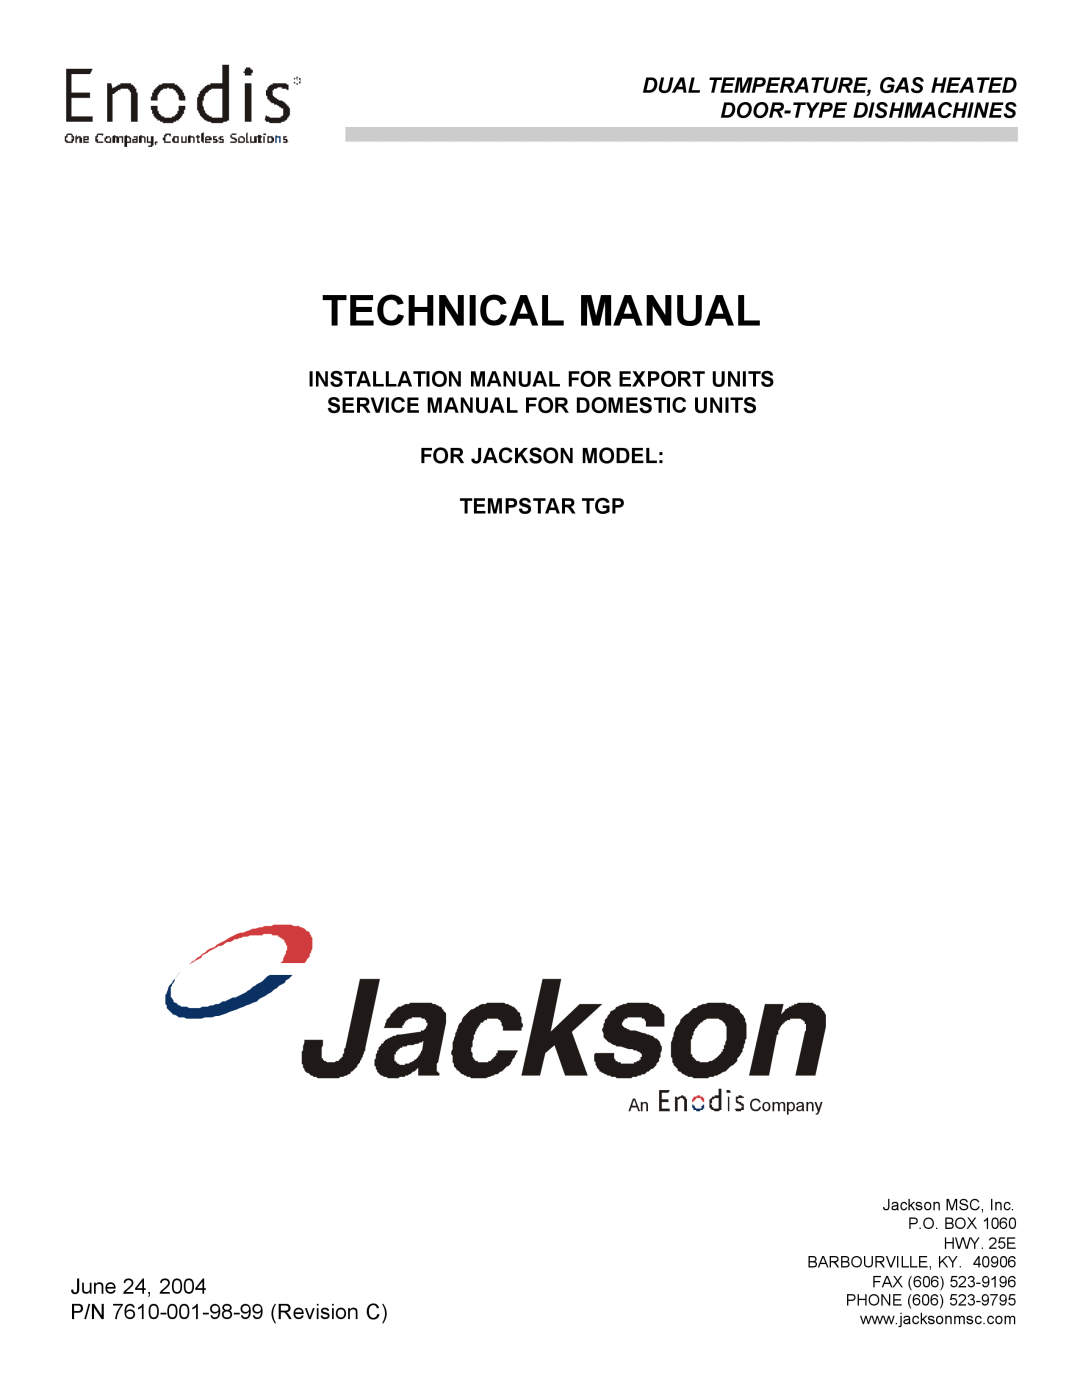 Jackson Tempstar TGP technical manual Installation Manual For Export Units, June 24 P/N 7610-001-98-99 Revision C 